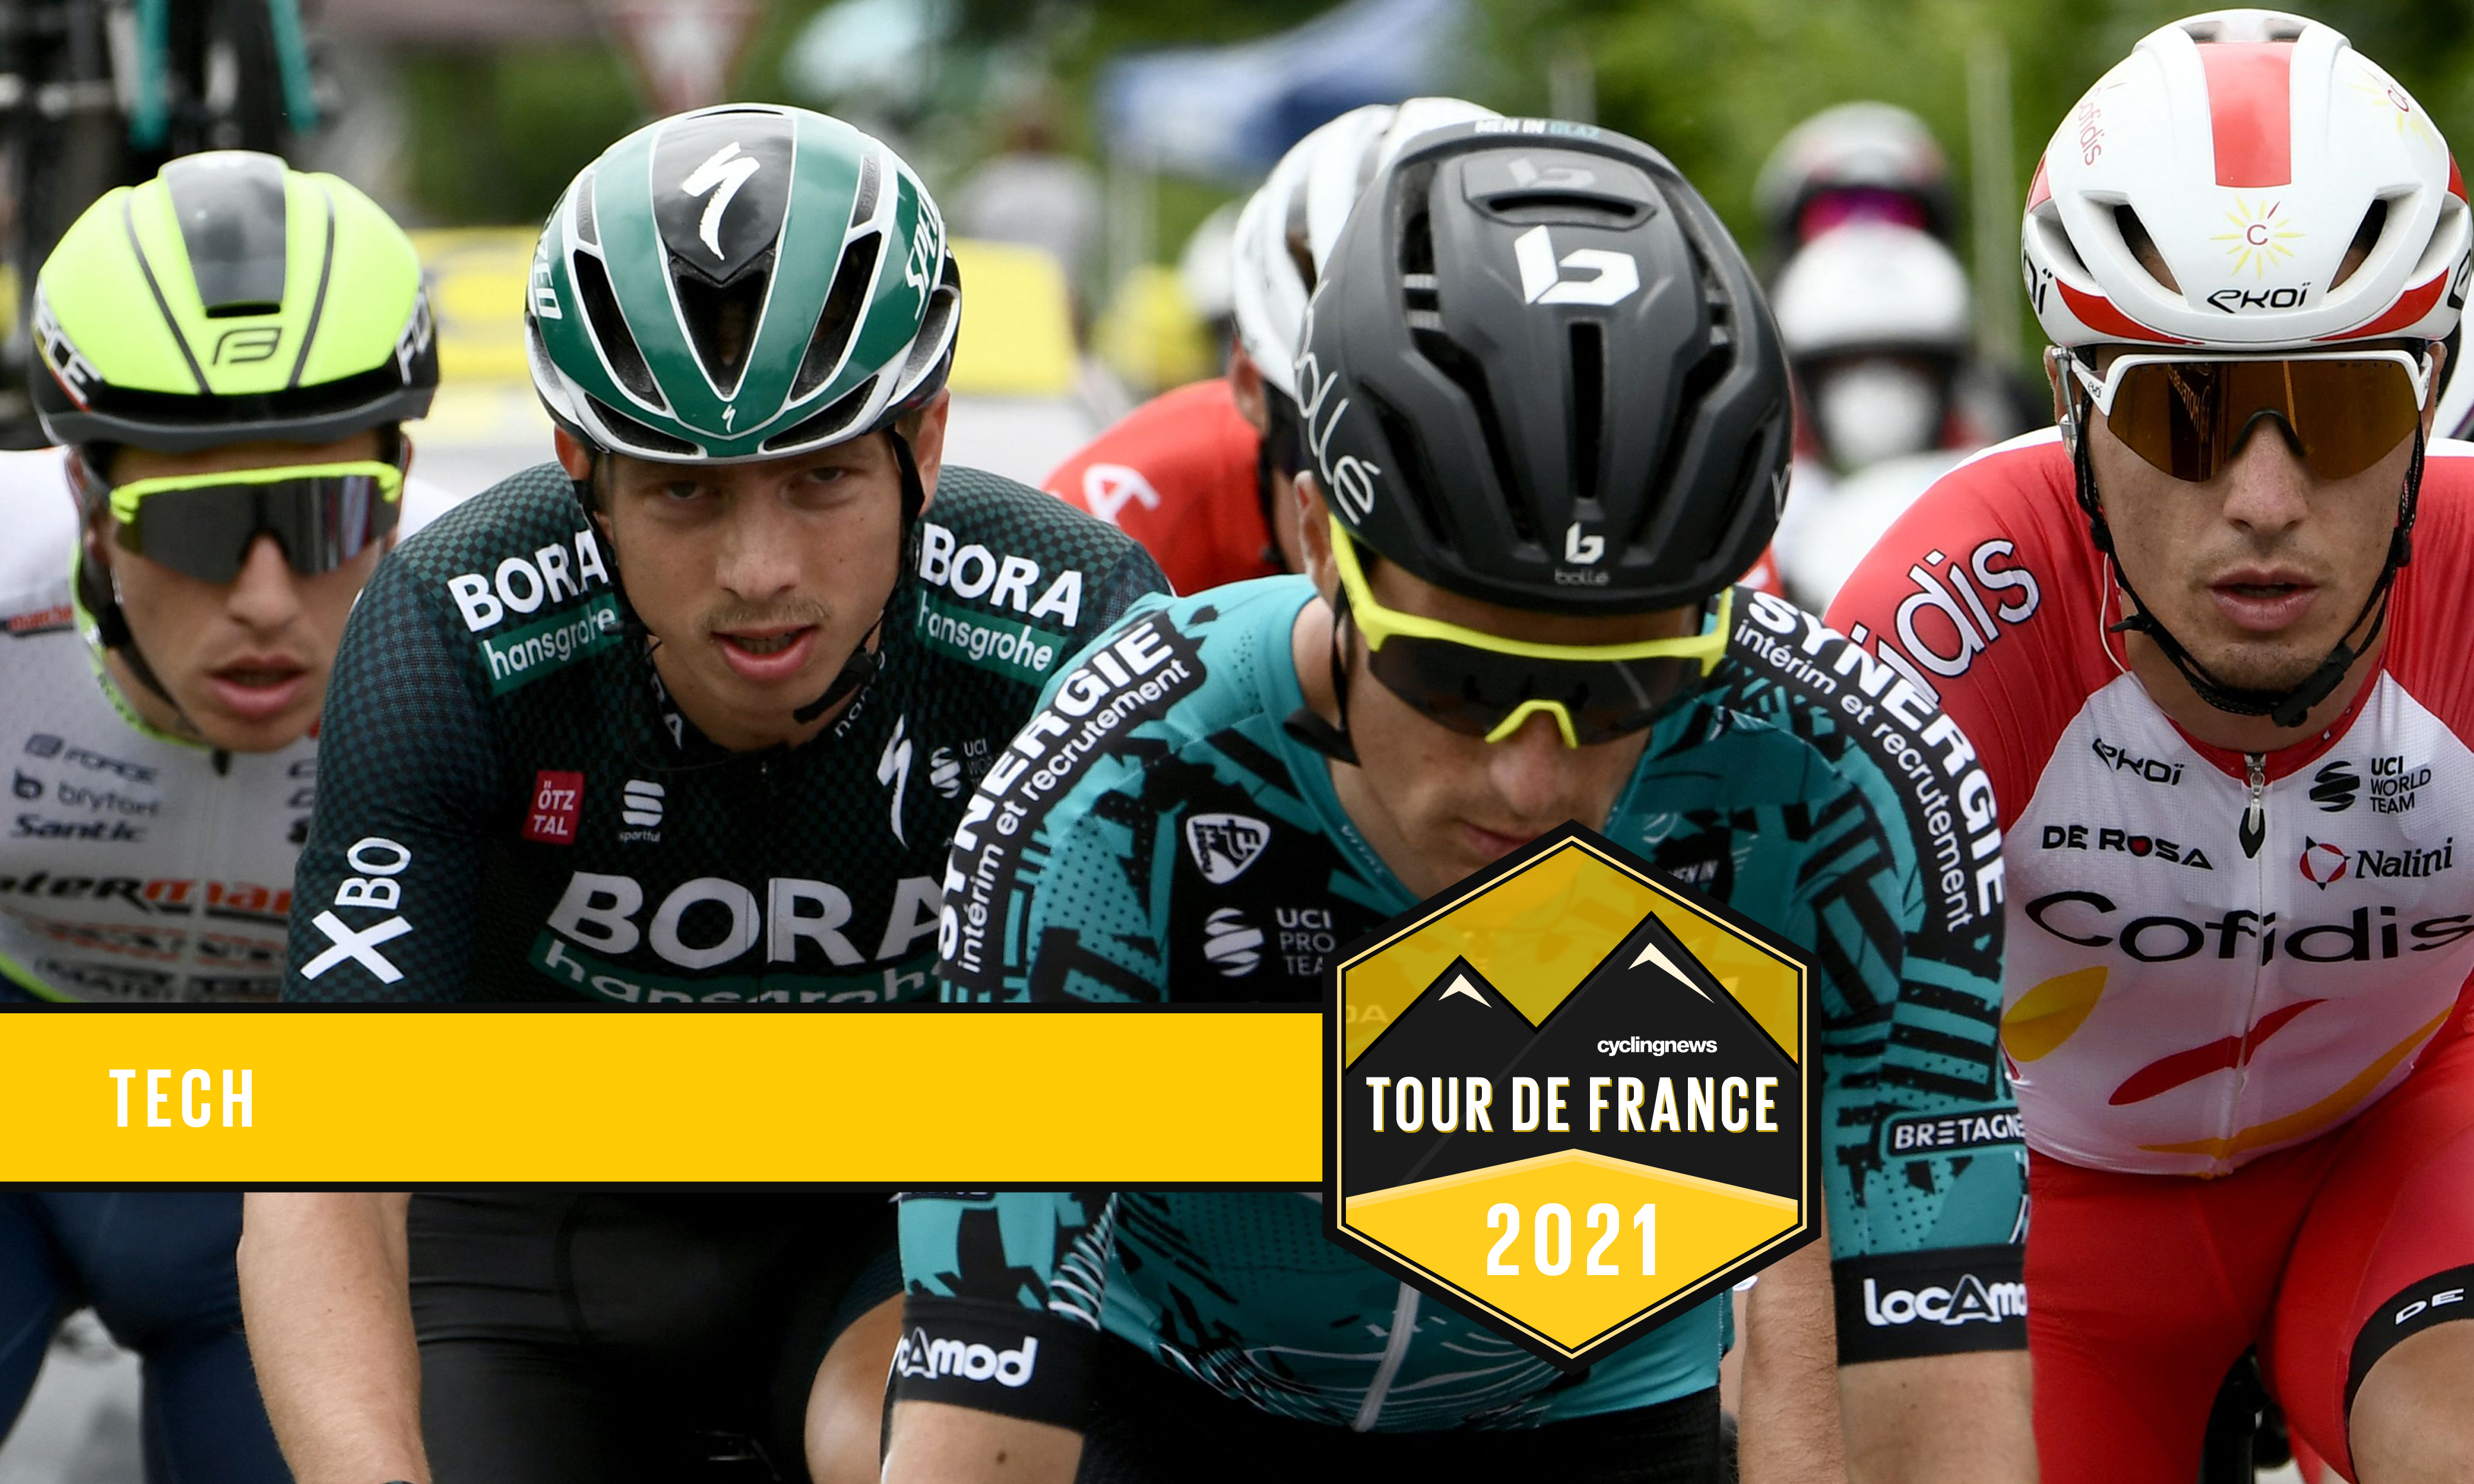 afsked Psykiatri overvælde Tour de France helmets: Who's wearing what? | Cyclingnews